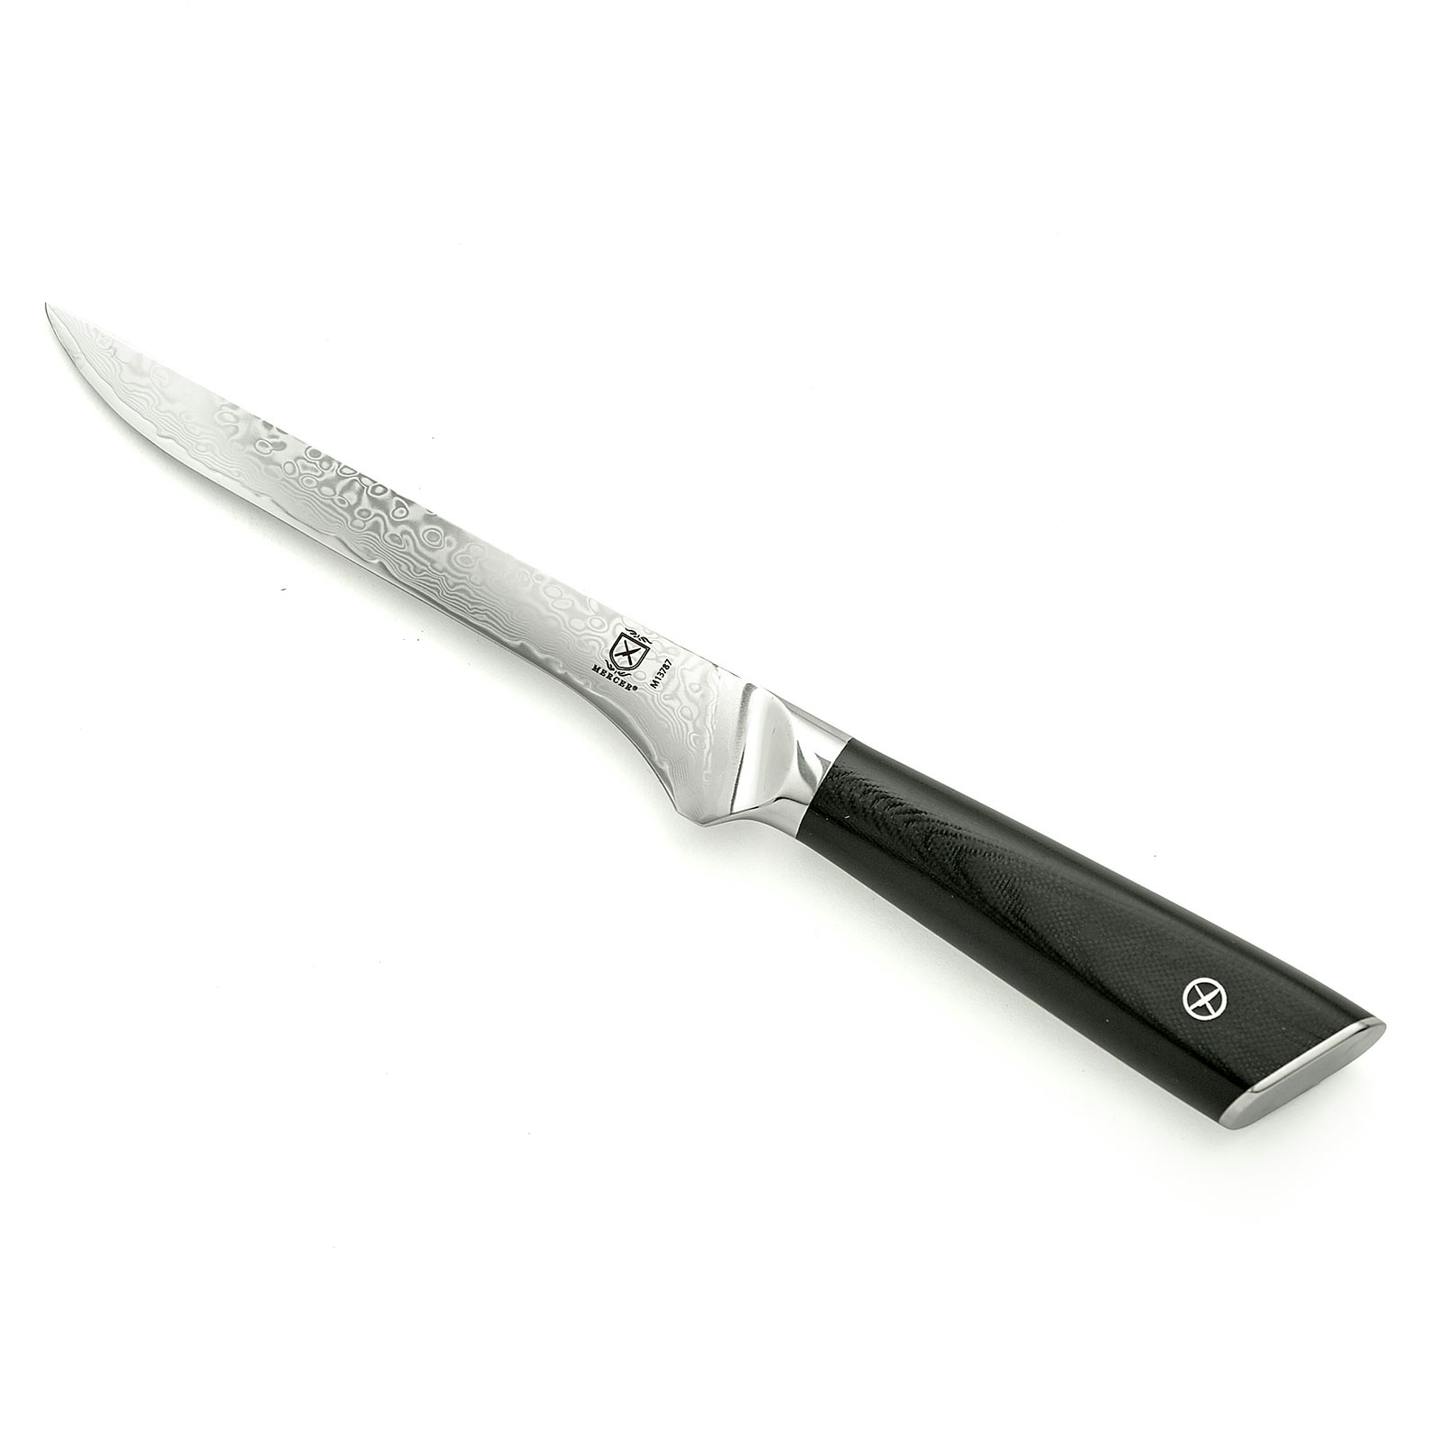 Mercer Culinary M13787 Premium Grade Super Steel, 6" Boning Knife, G10 Handle